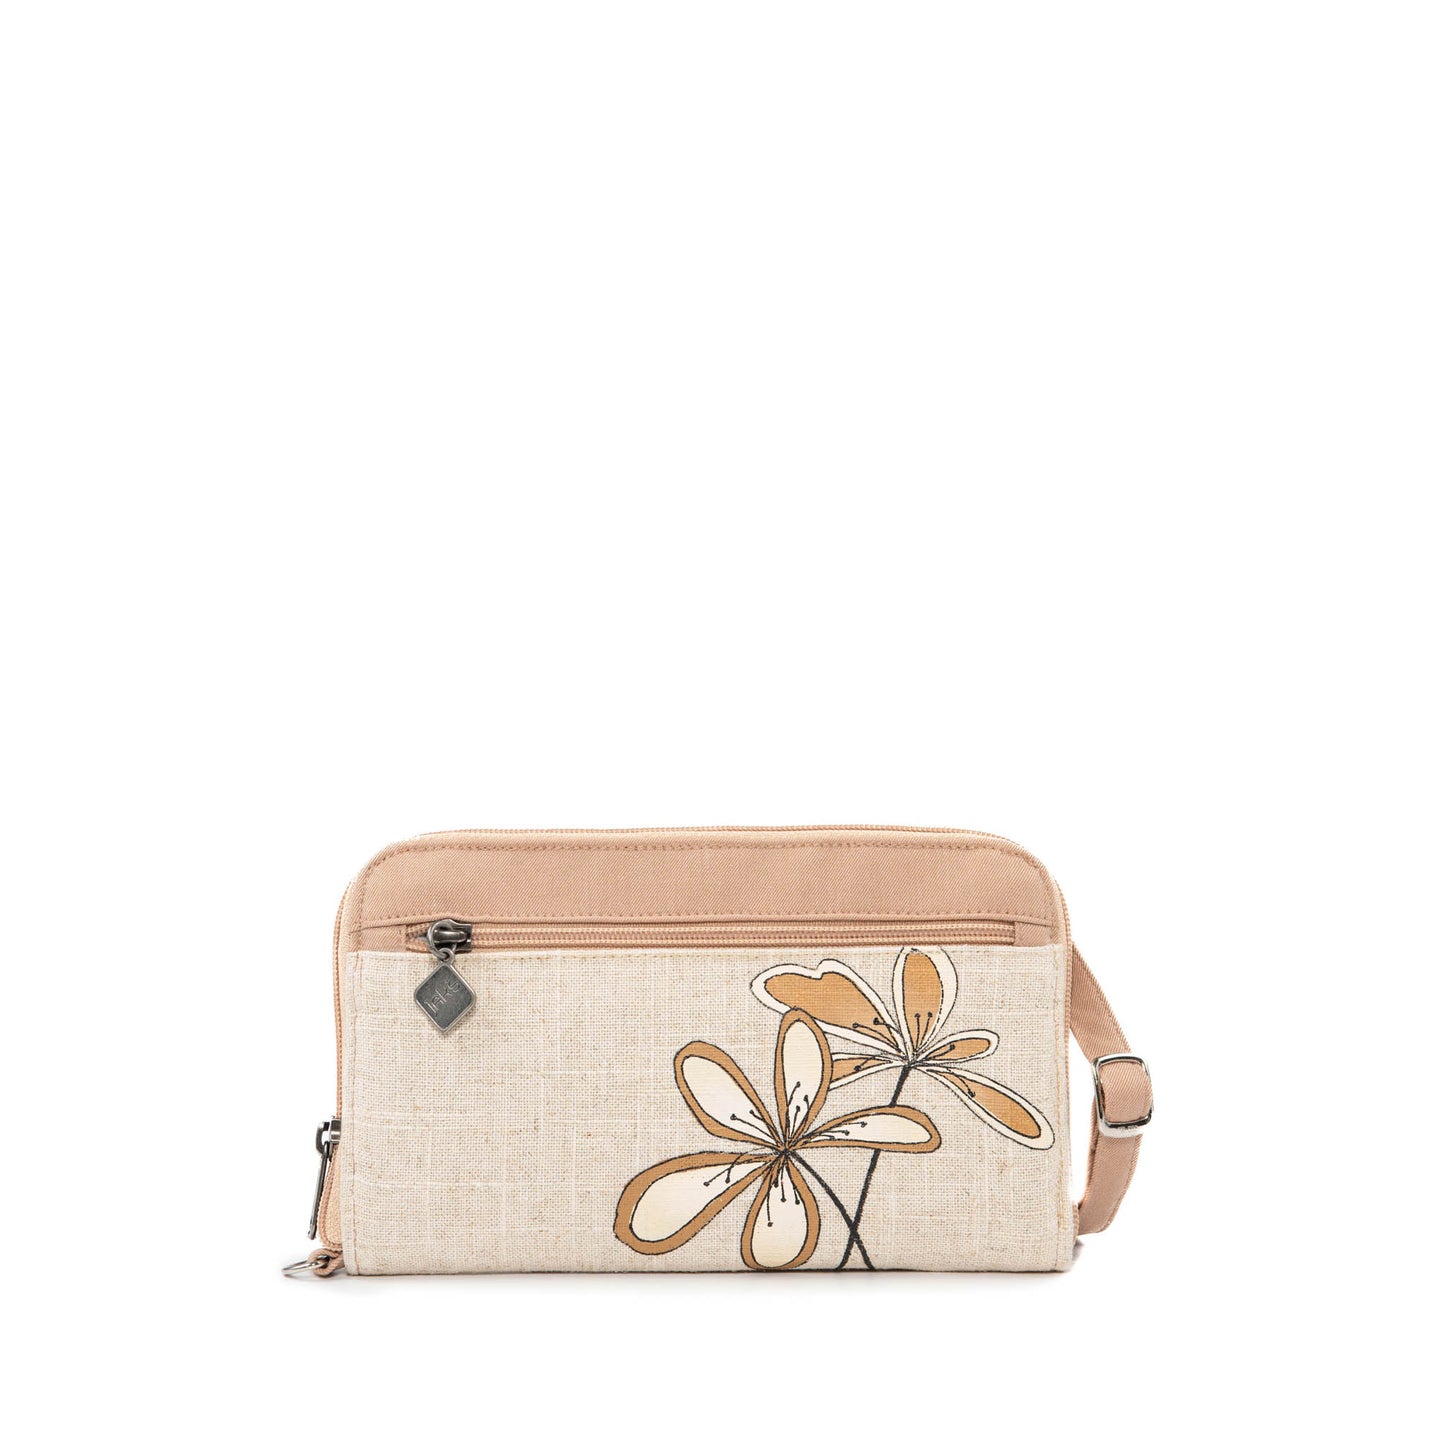 Wallet Purse with Flower Design